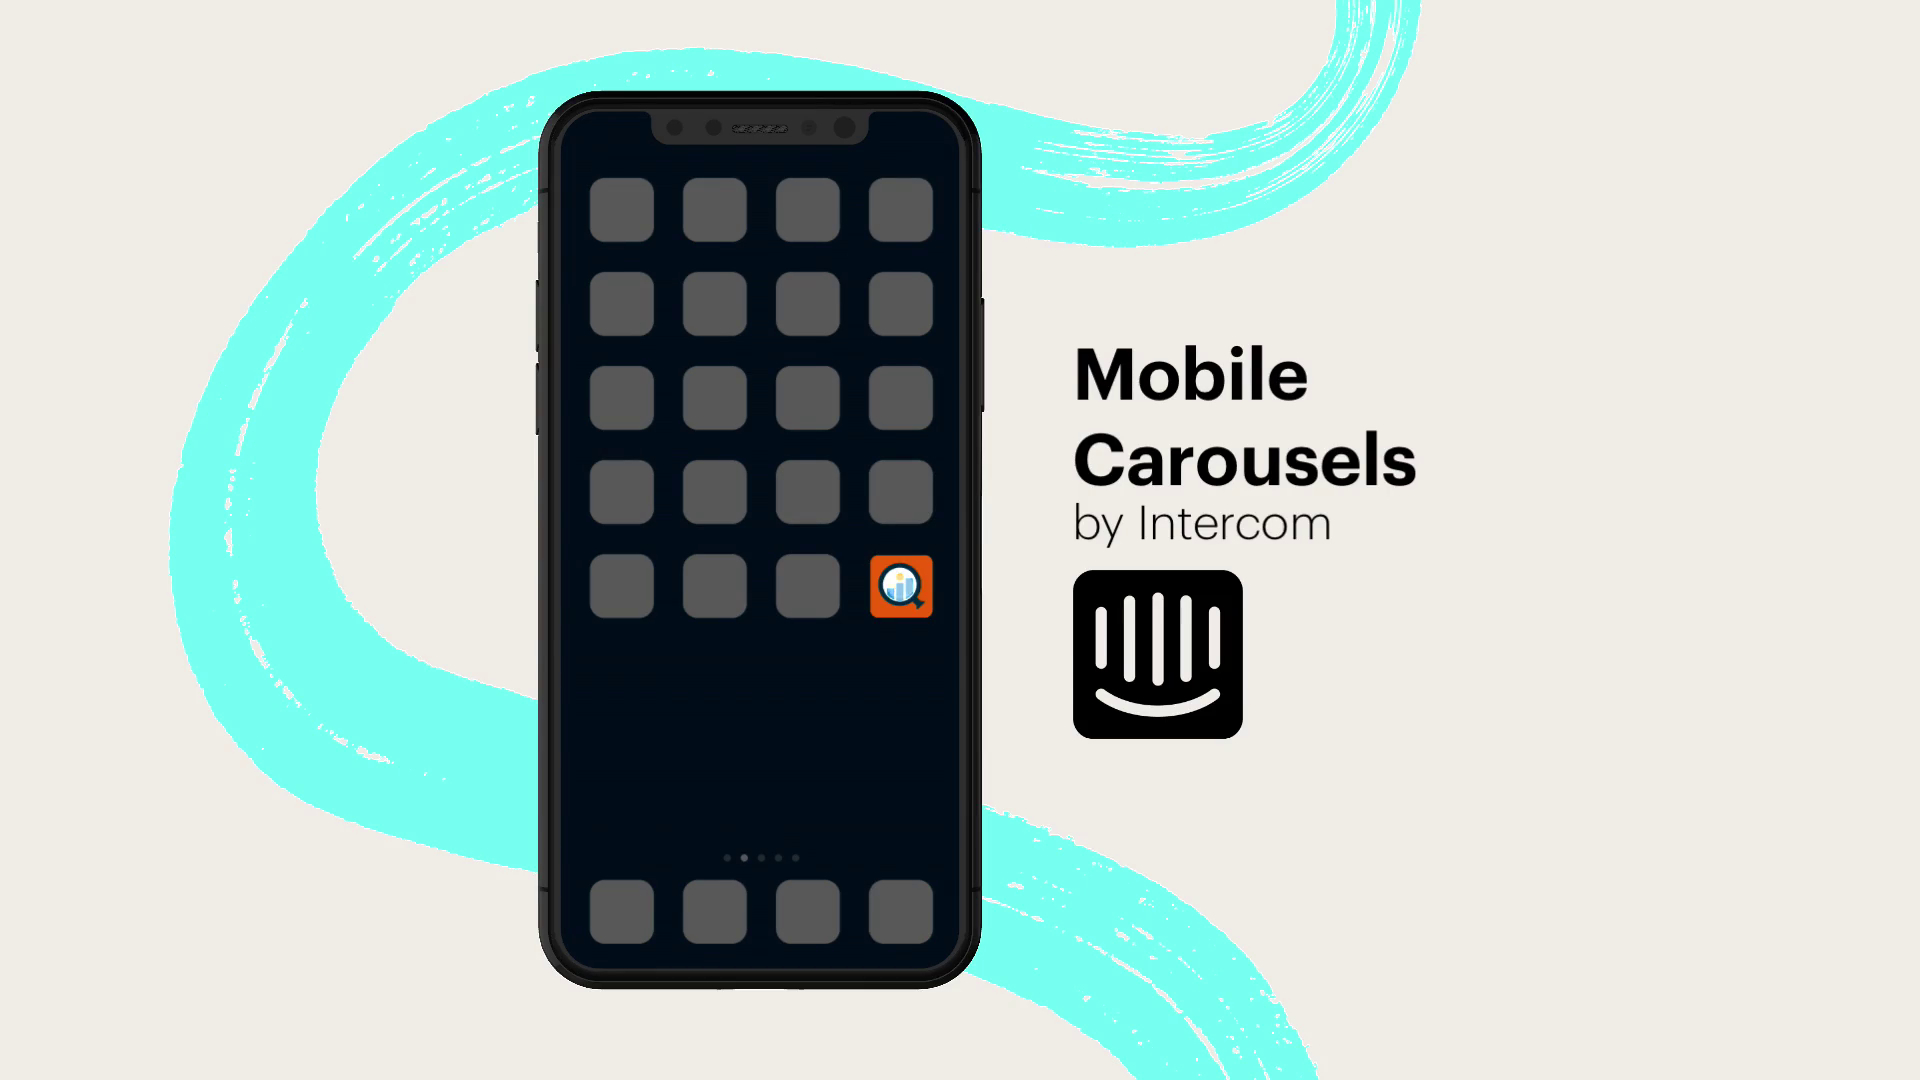 Intercom's Mobile Carousels